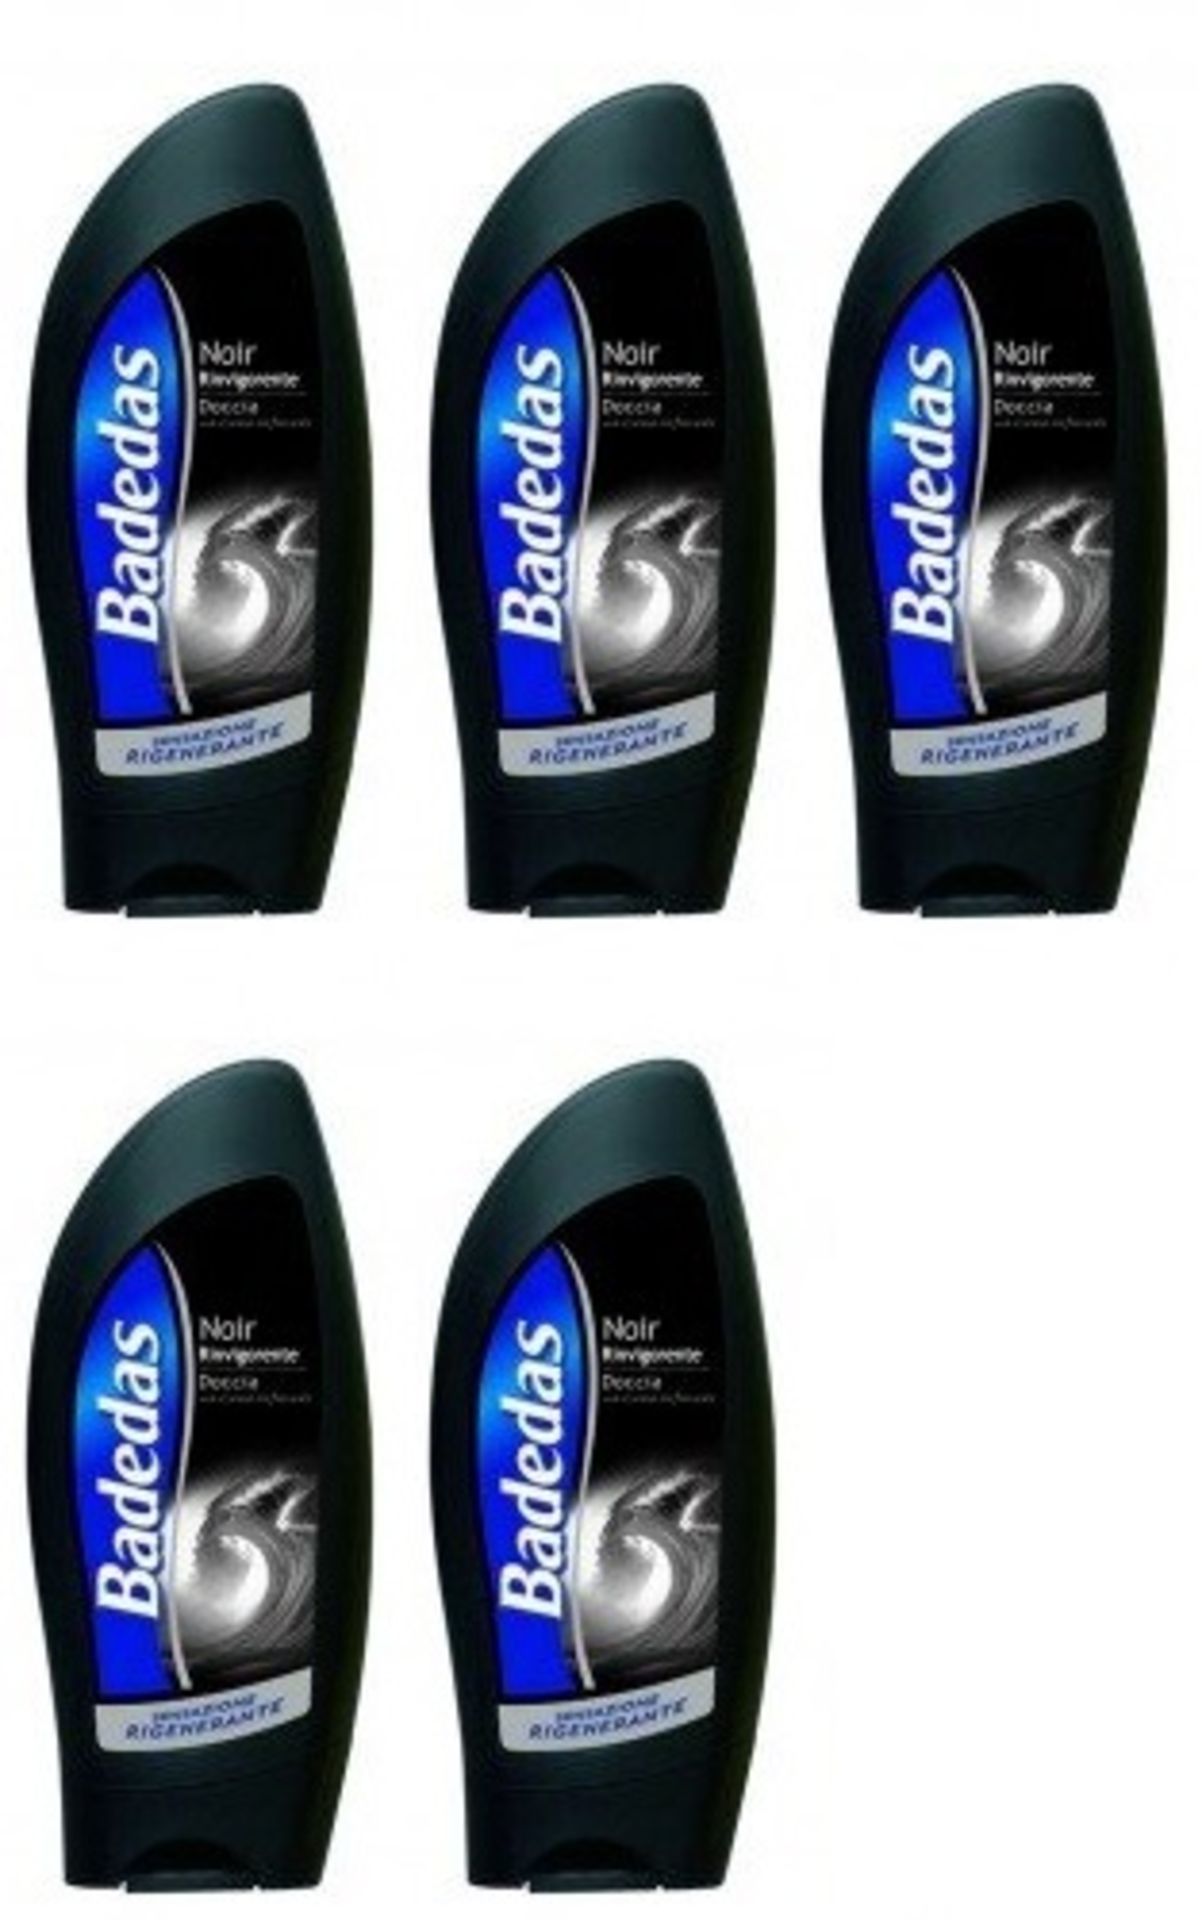 V Brand New Lot Of 5 Badedas Noir Invigorating Bath Gel 500ml + 250 ml Free X 2 YOUR BID PRICE TO BE